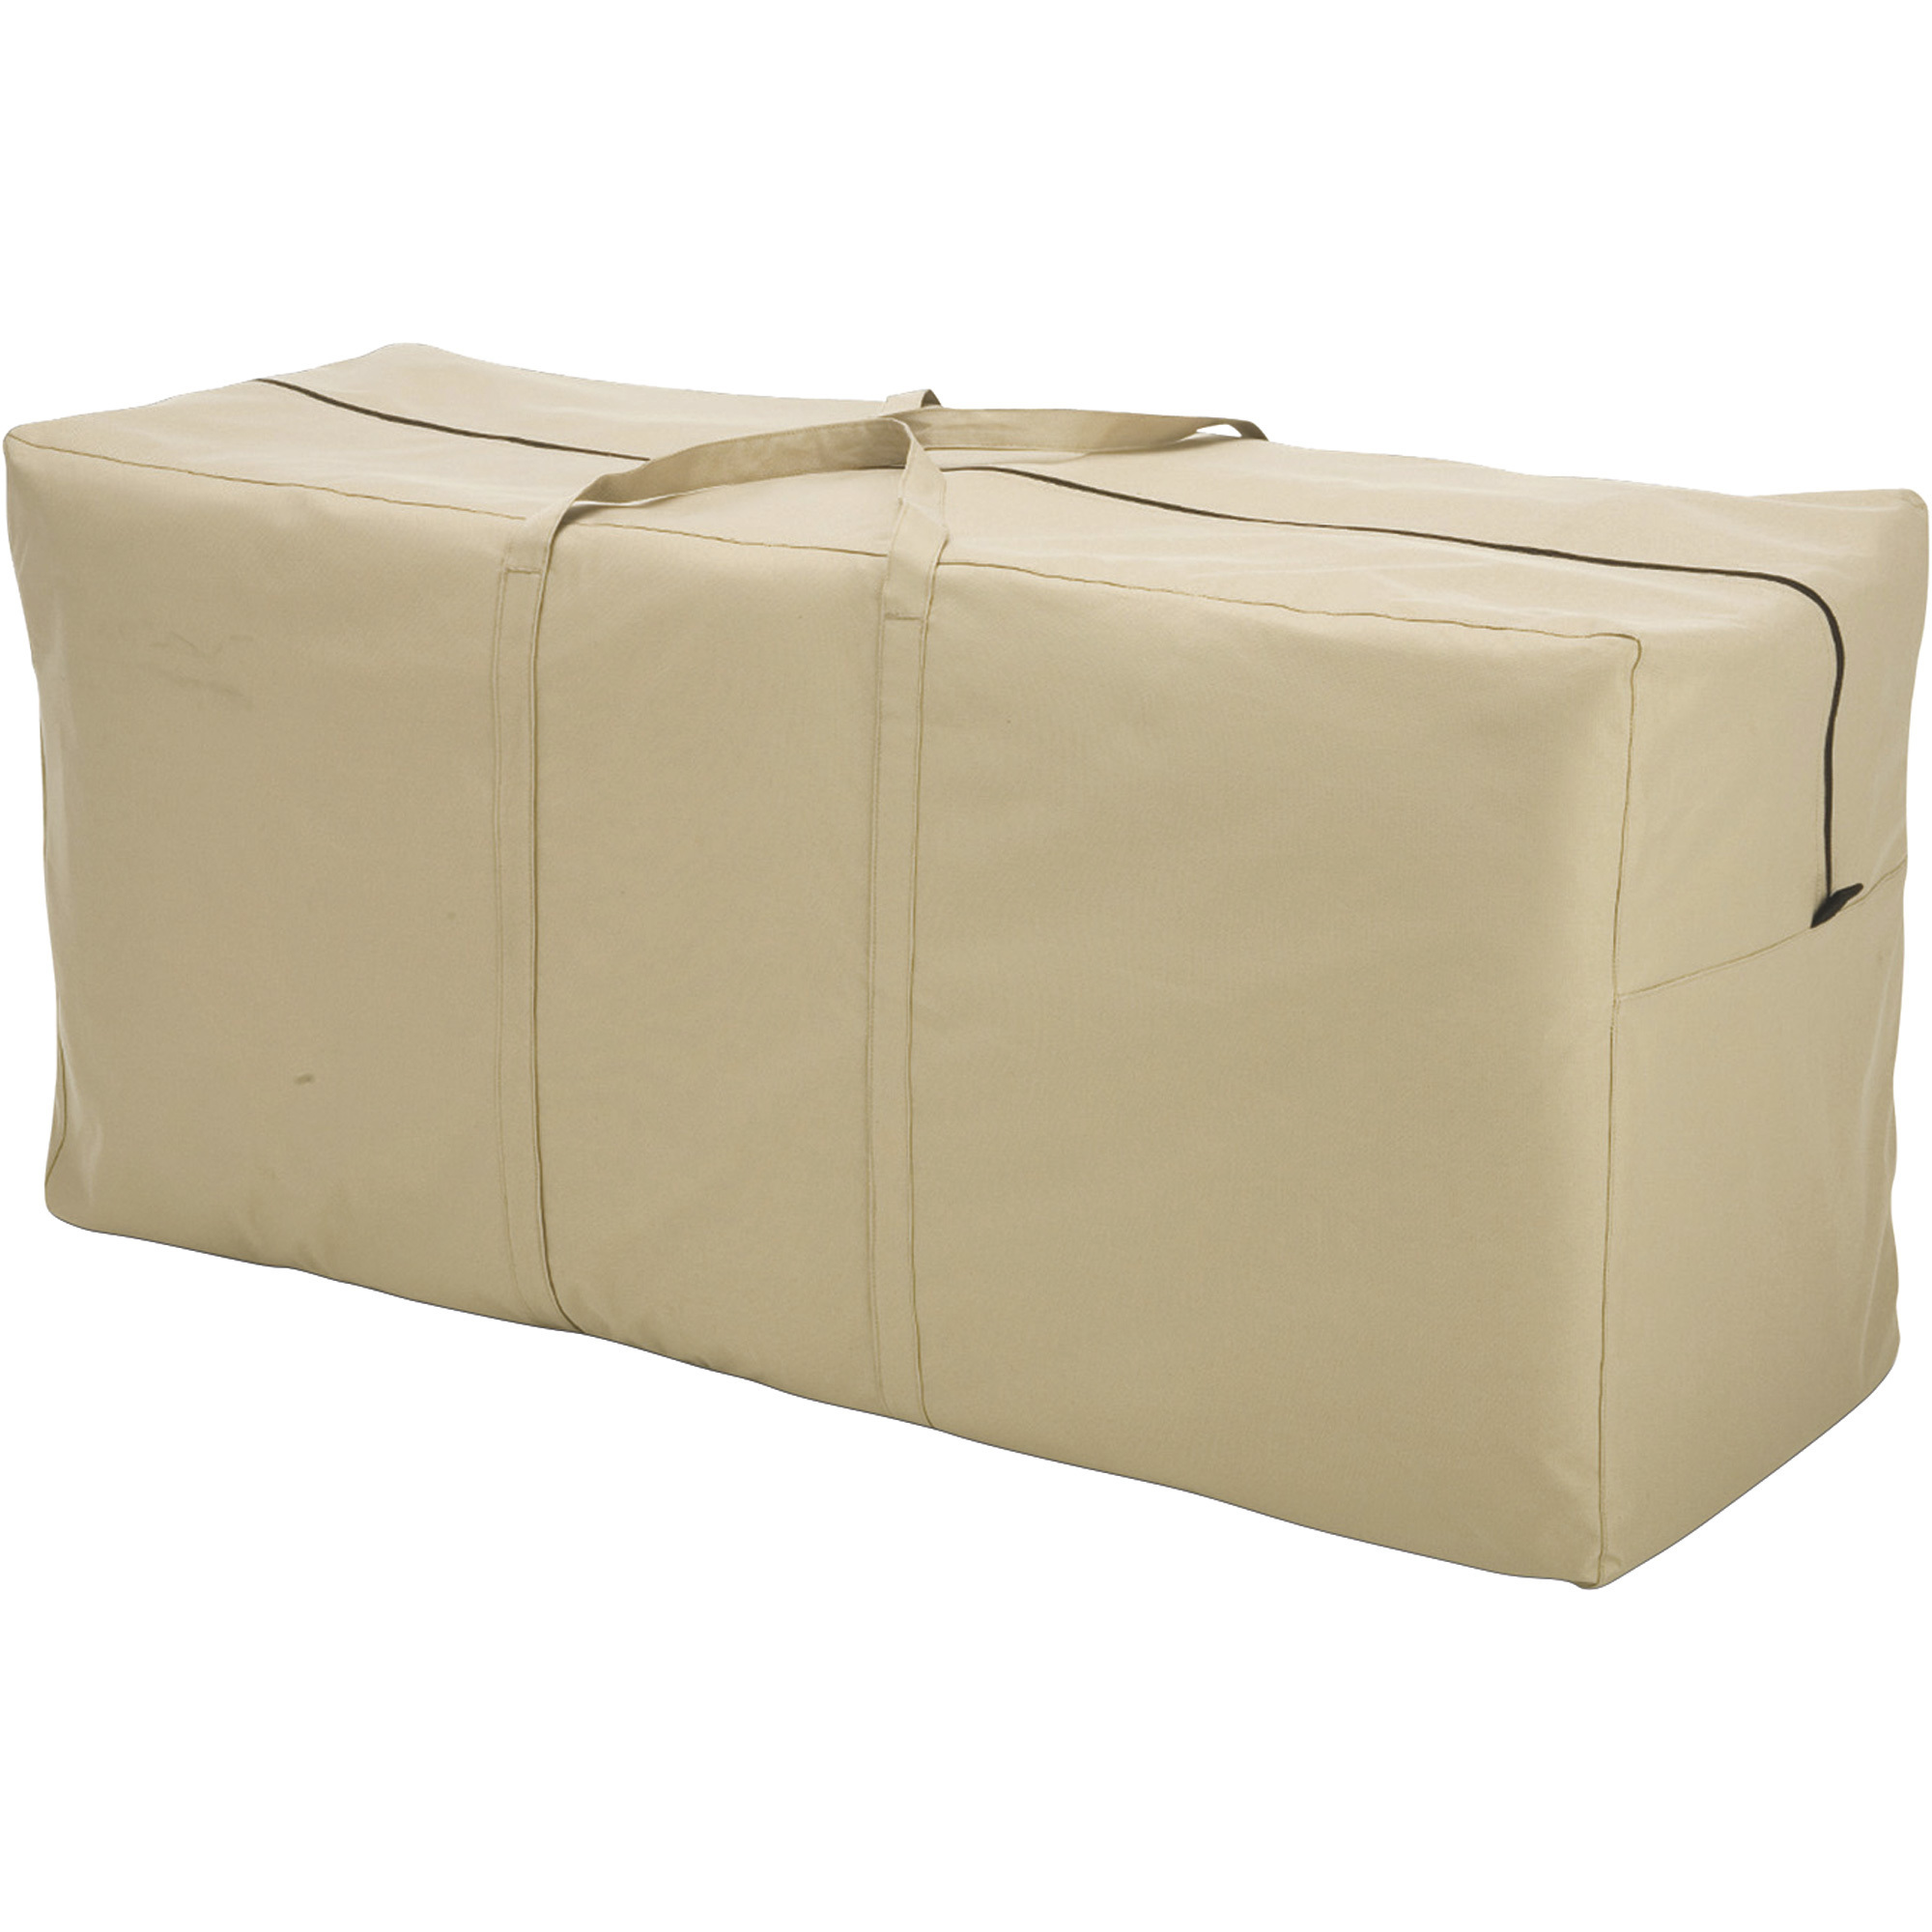 Classic Accessories Terrazzo Patio Cushion Cover/Storage Bag, Sand, 45 1/2Inch L x 13 3/4Inch W x 20Inch H, Model 58982